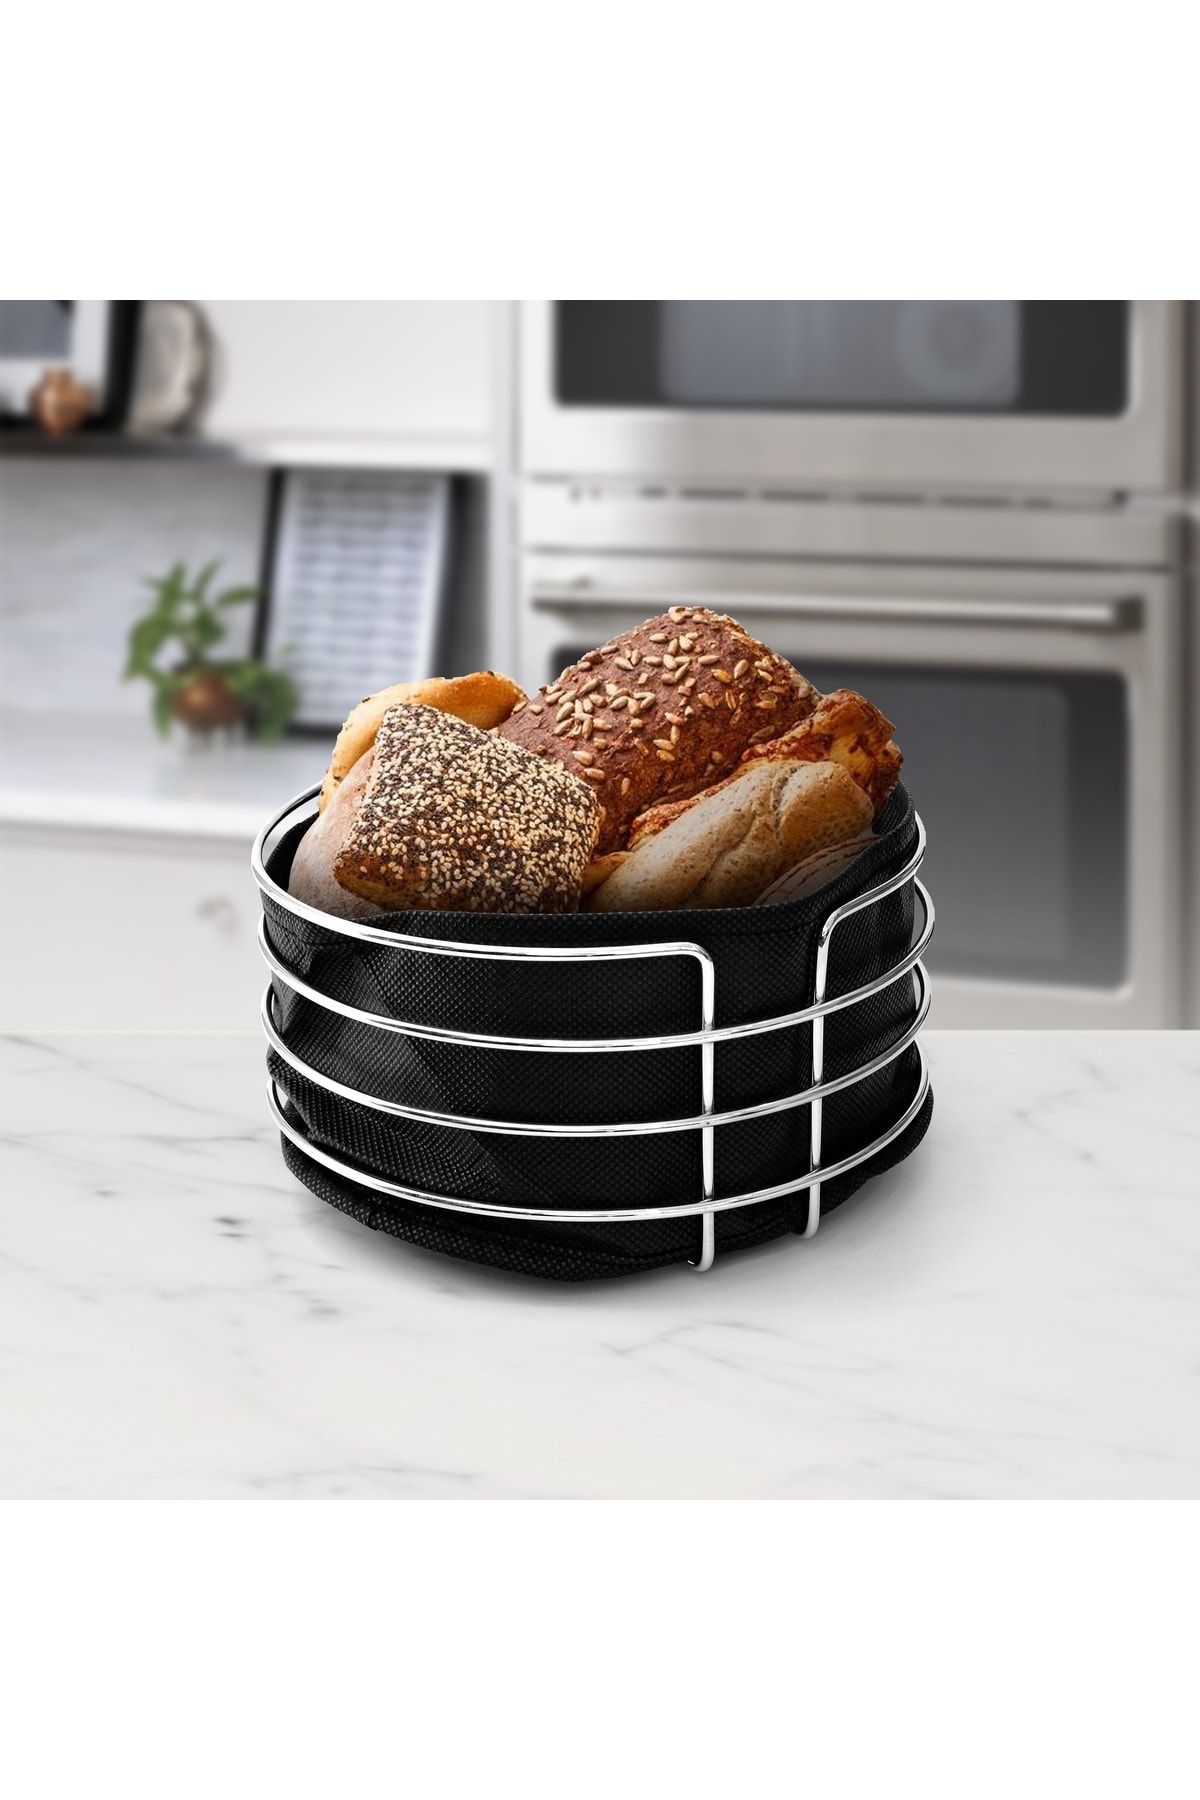 KardemHome Ekmeklik Yuvarlak Ekmek Sepeti Çok Amaçlı Metal Kutu Lüx Paslanmaz Sepet